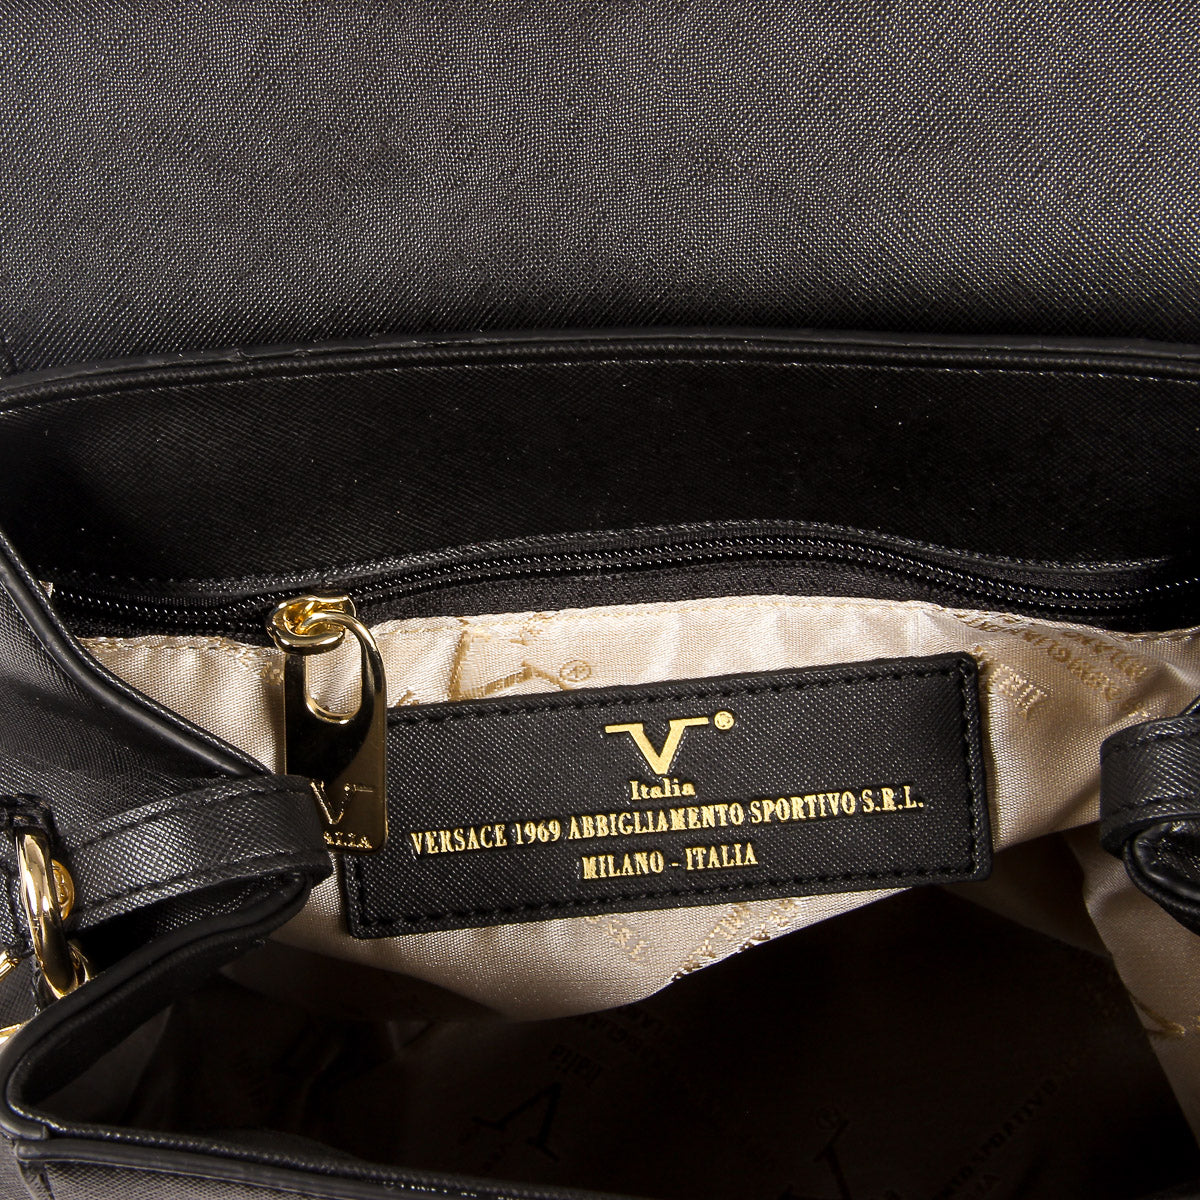 19v69 italia by versace backpack